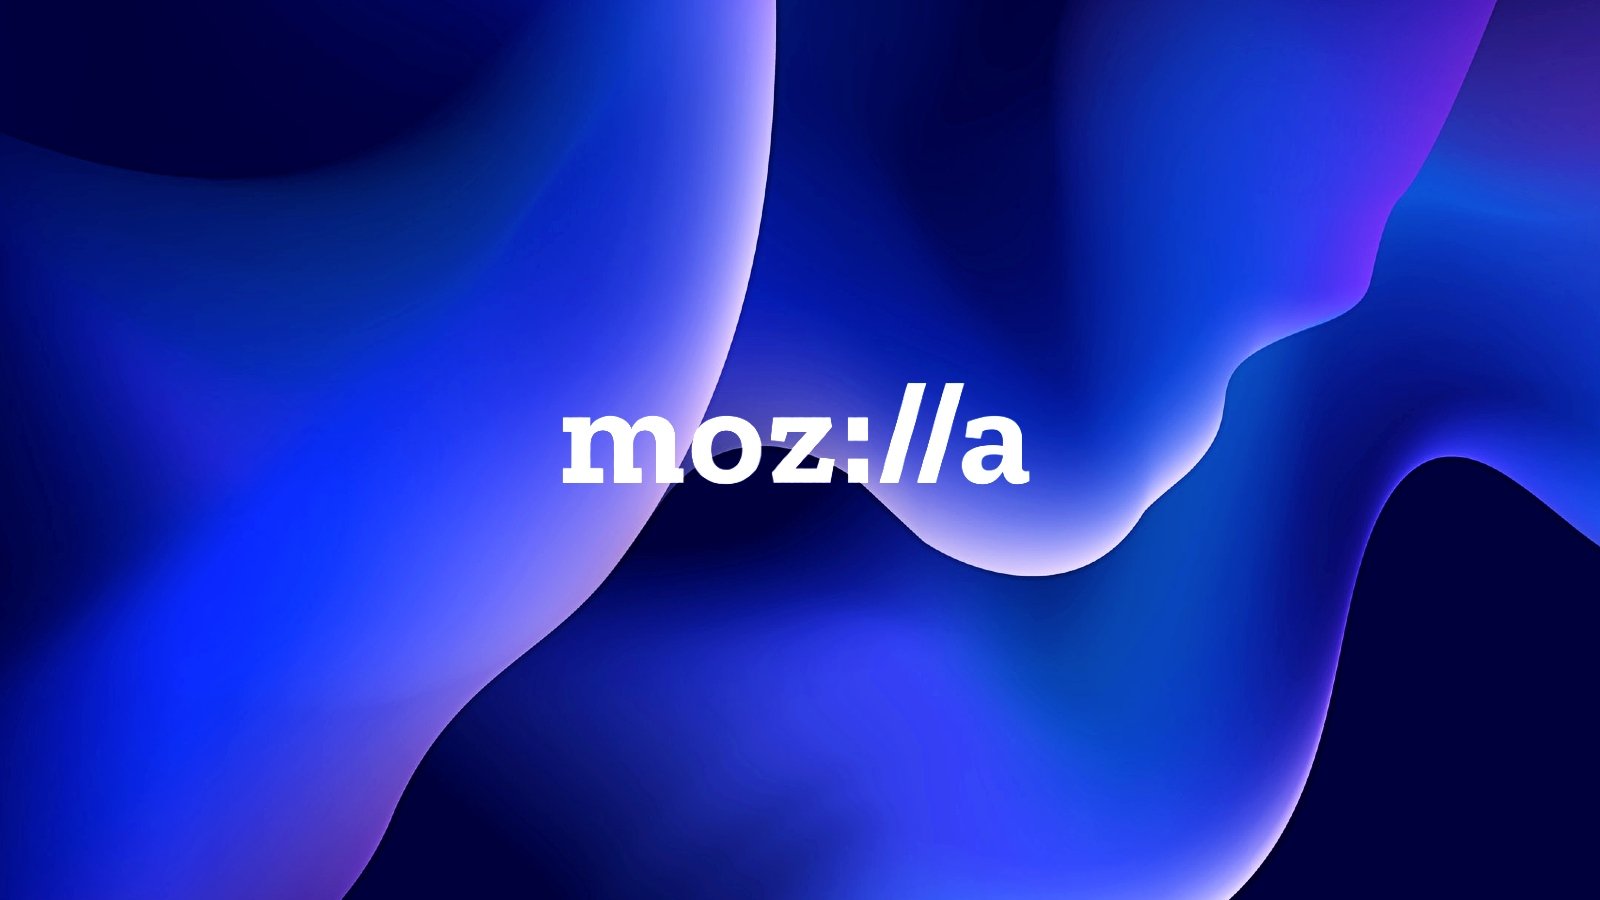 Mozilla: Update Firefox to avoid Netflix, Hulu streaming issues